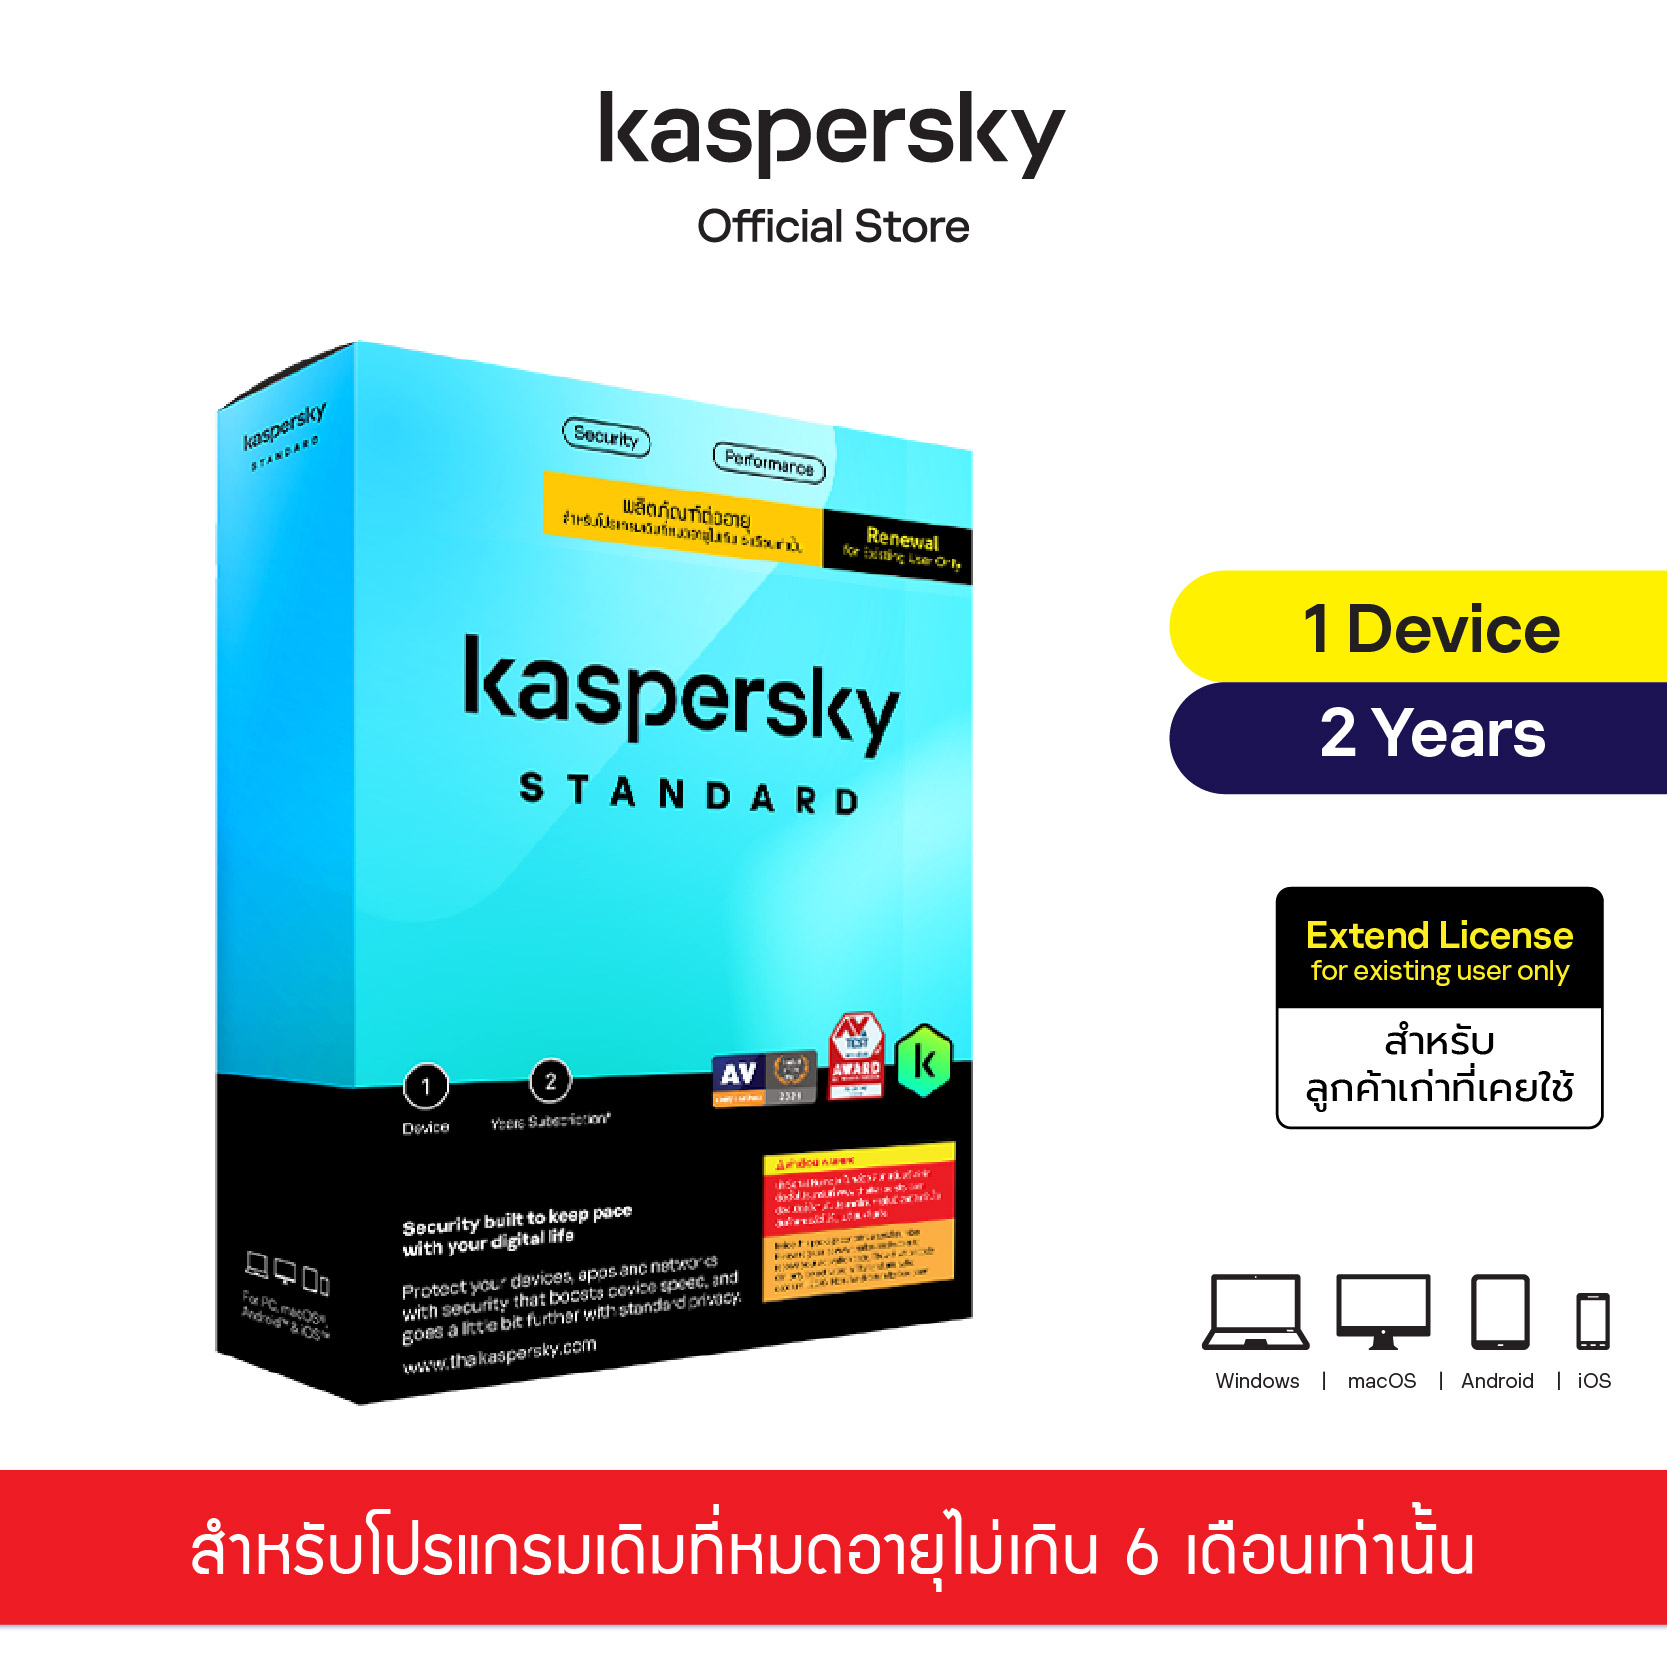 Kaspersky Standard 1 Device 2 Year (Extend  License)